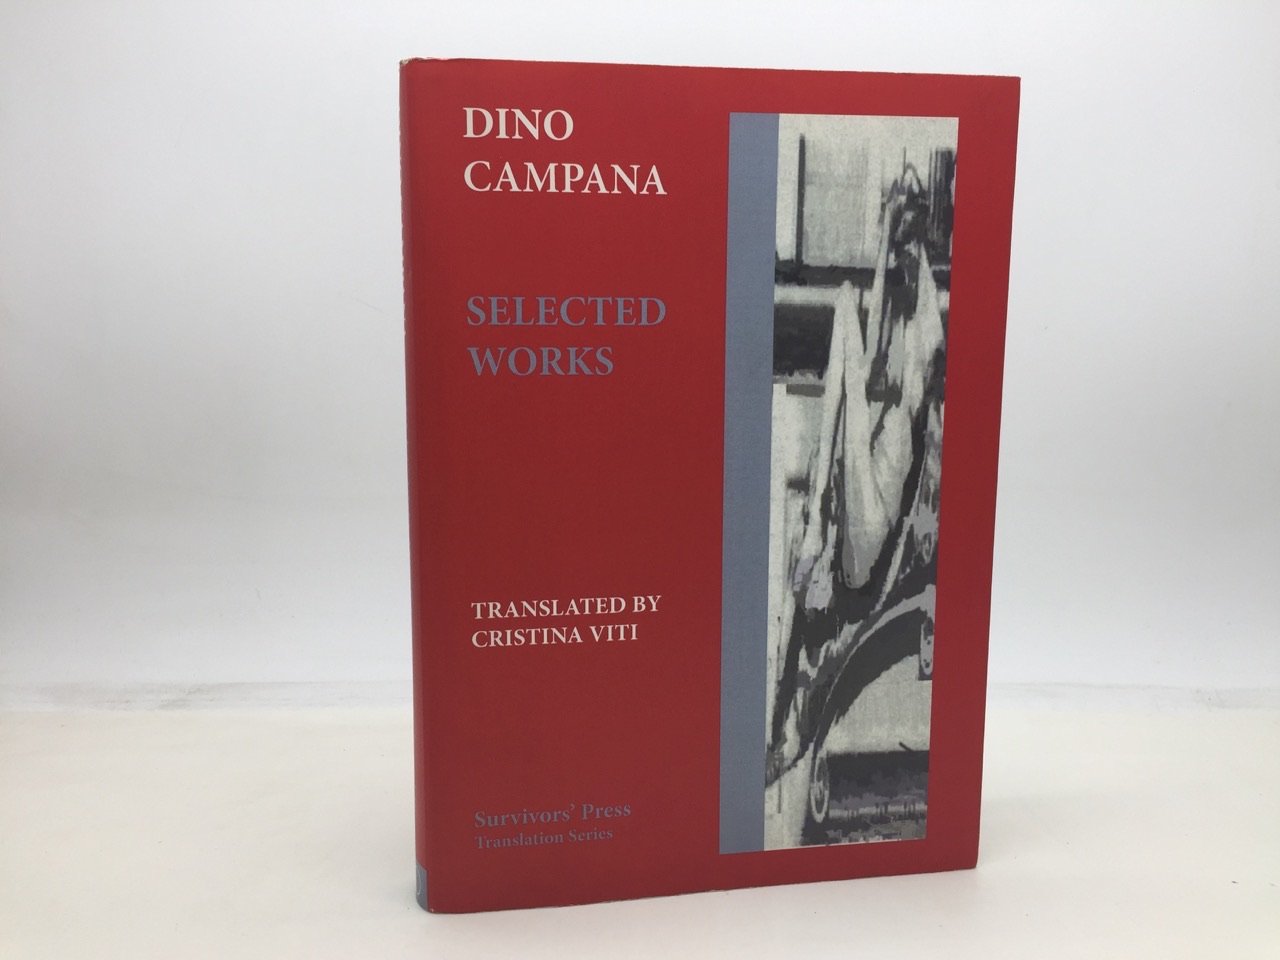 DINO CAMPANA SELECTED WORKS - CAMPANA, Dino, Cristina Viti (Trans.)